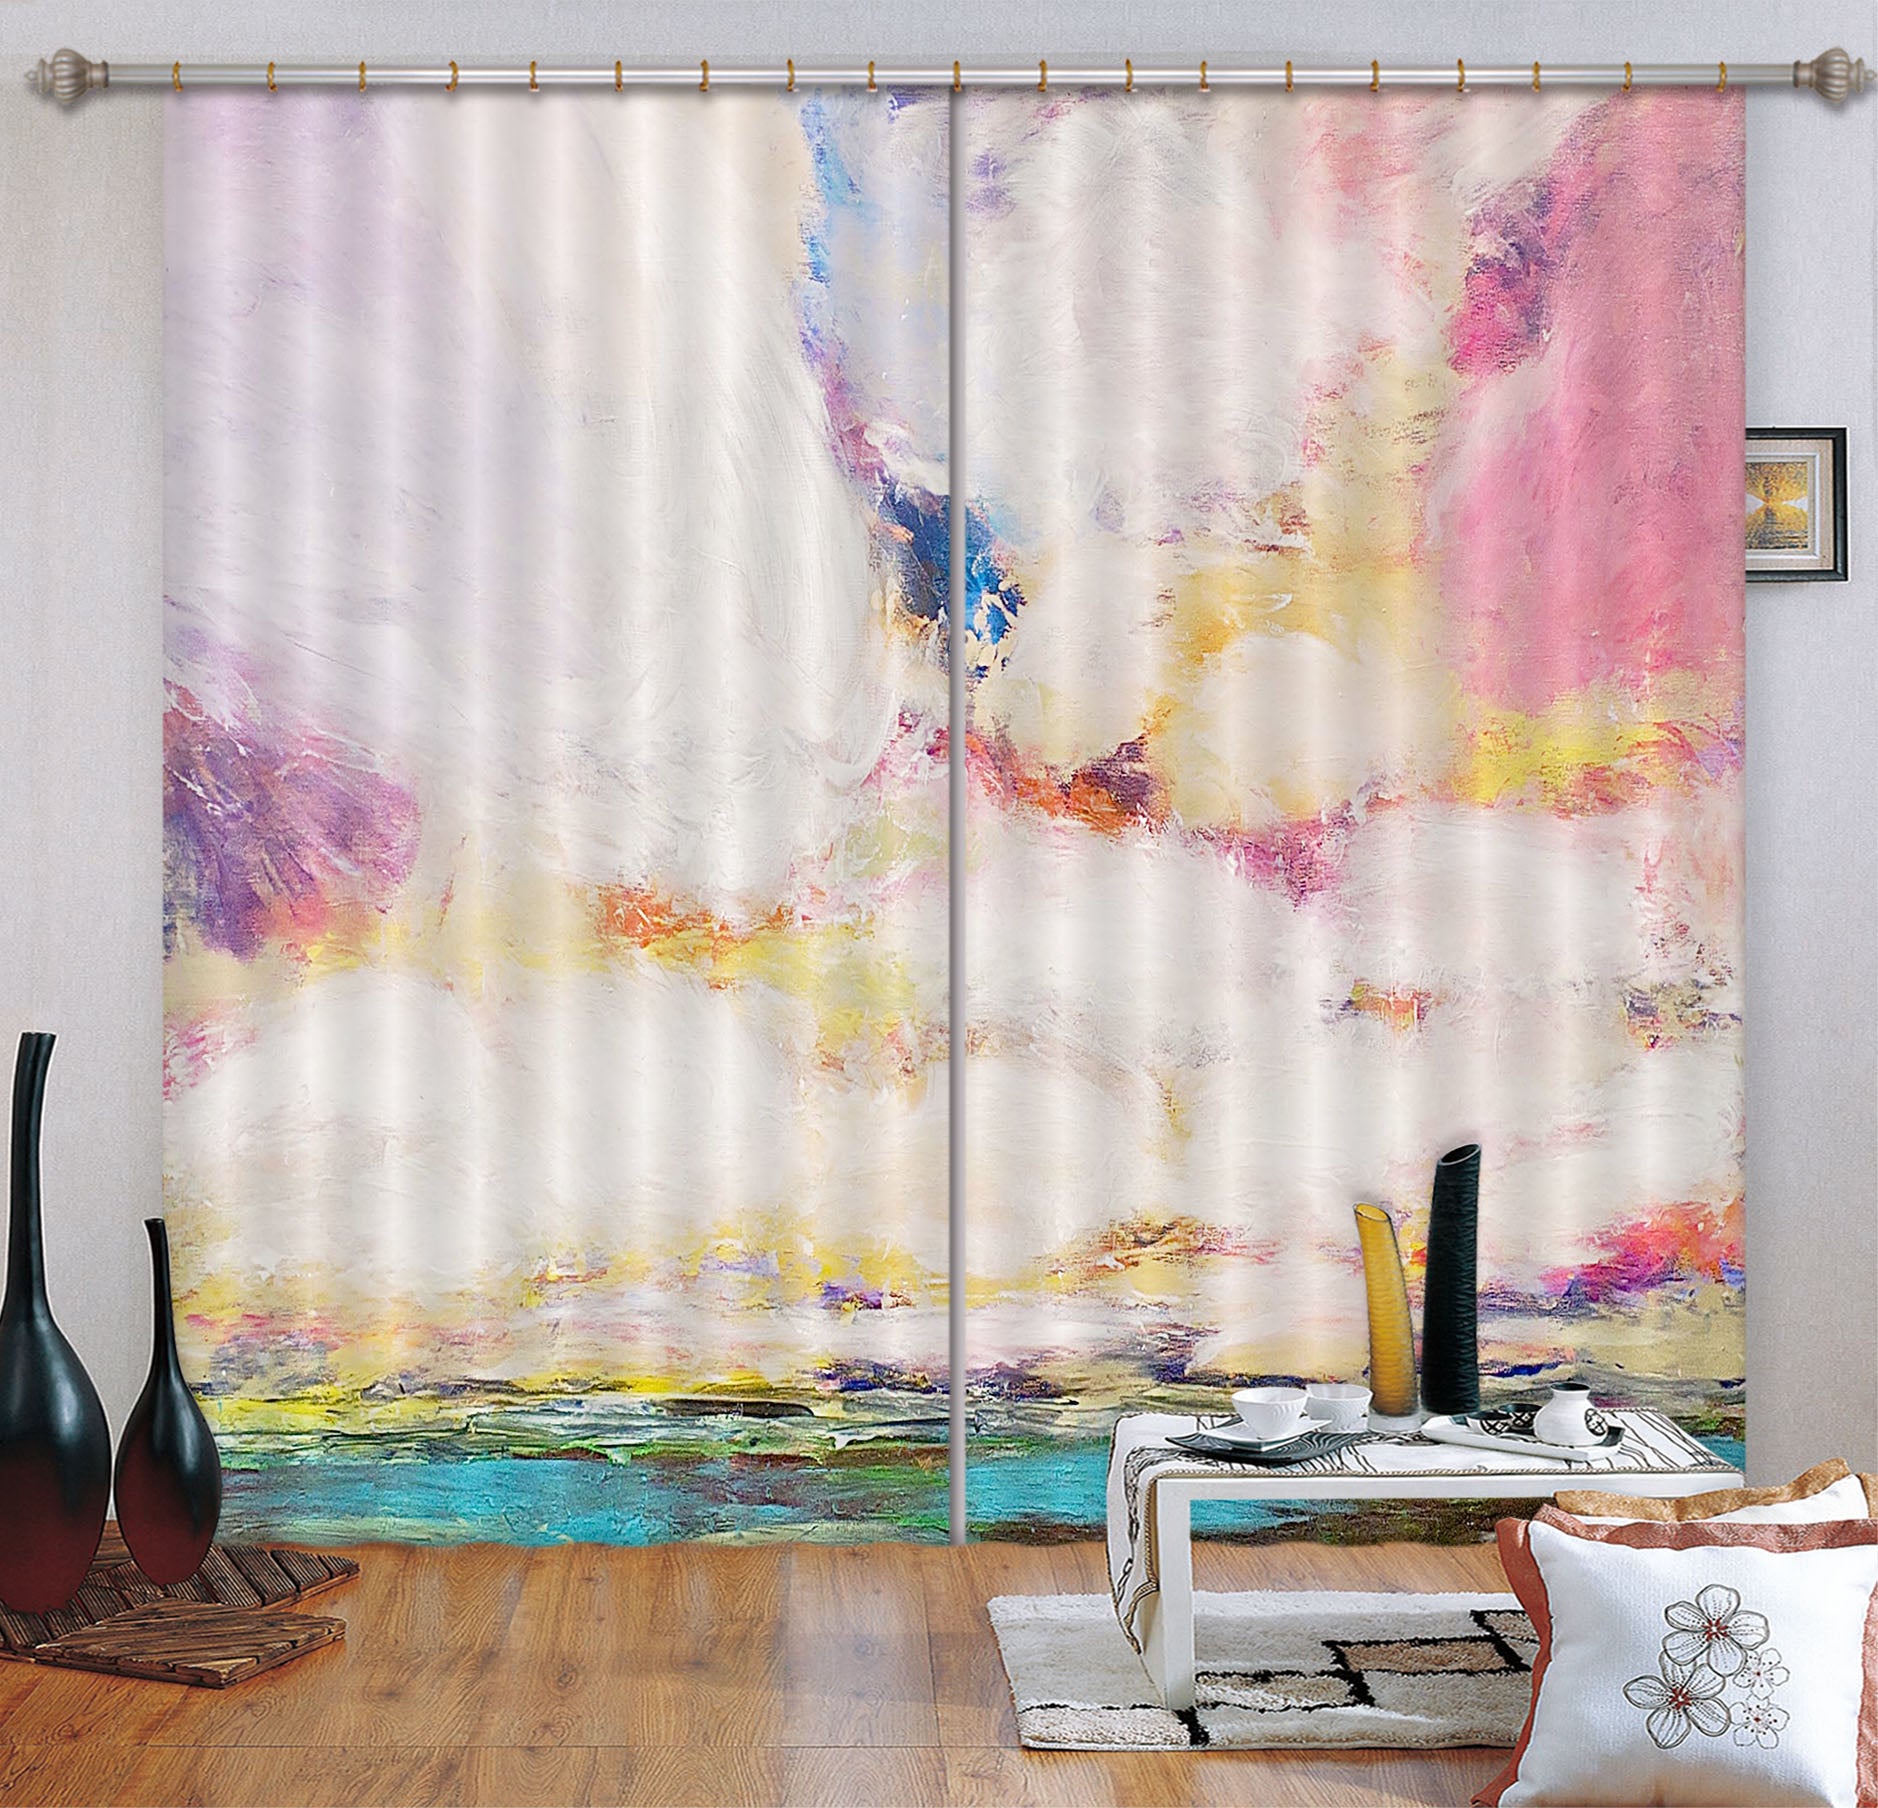 3D Colored Sky 037 Allan P. Friedlander Curtain Curtains Drapes